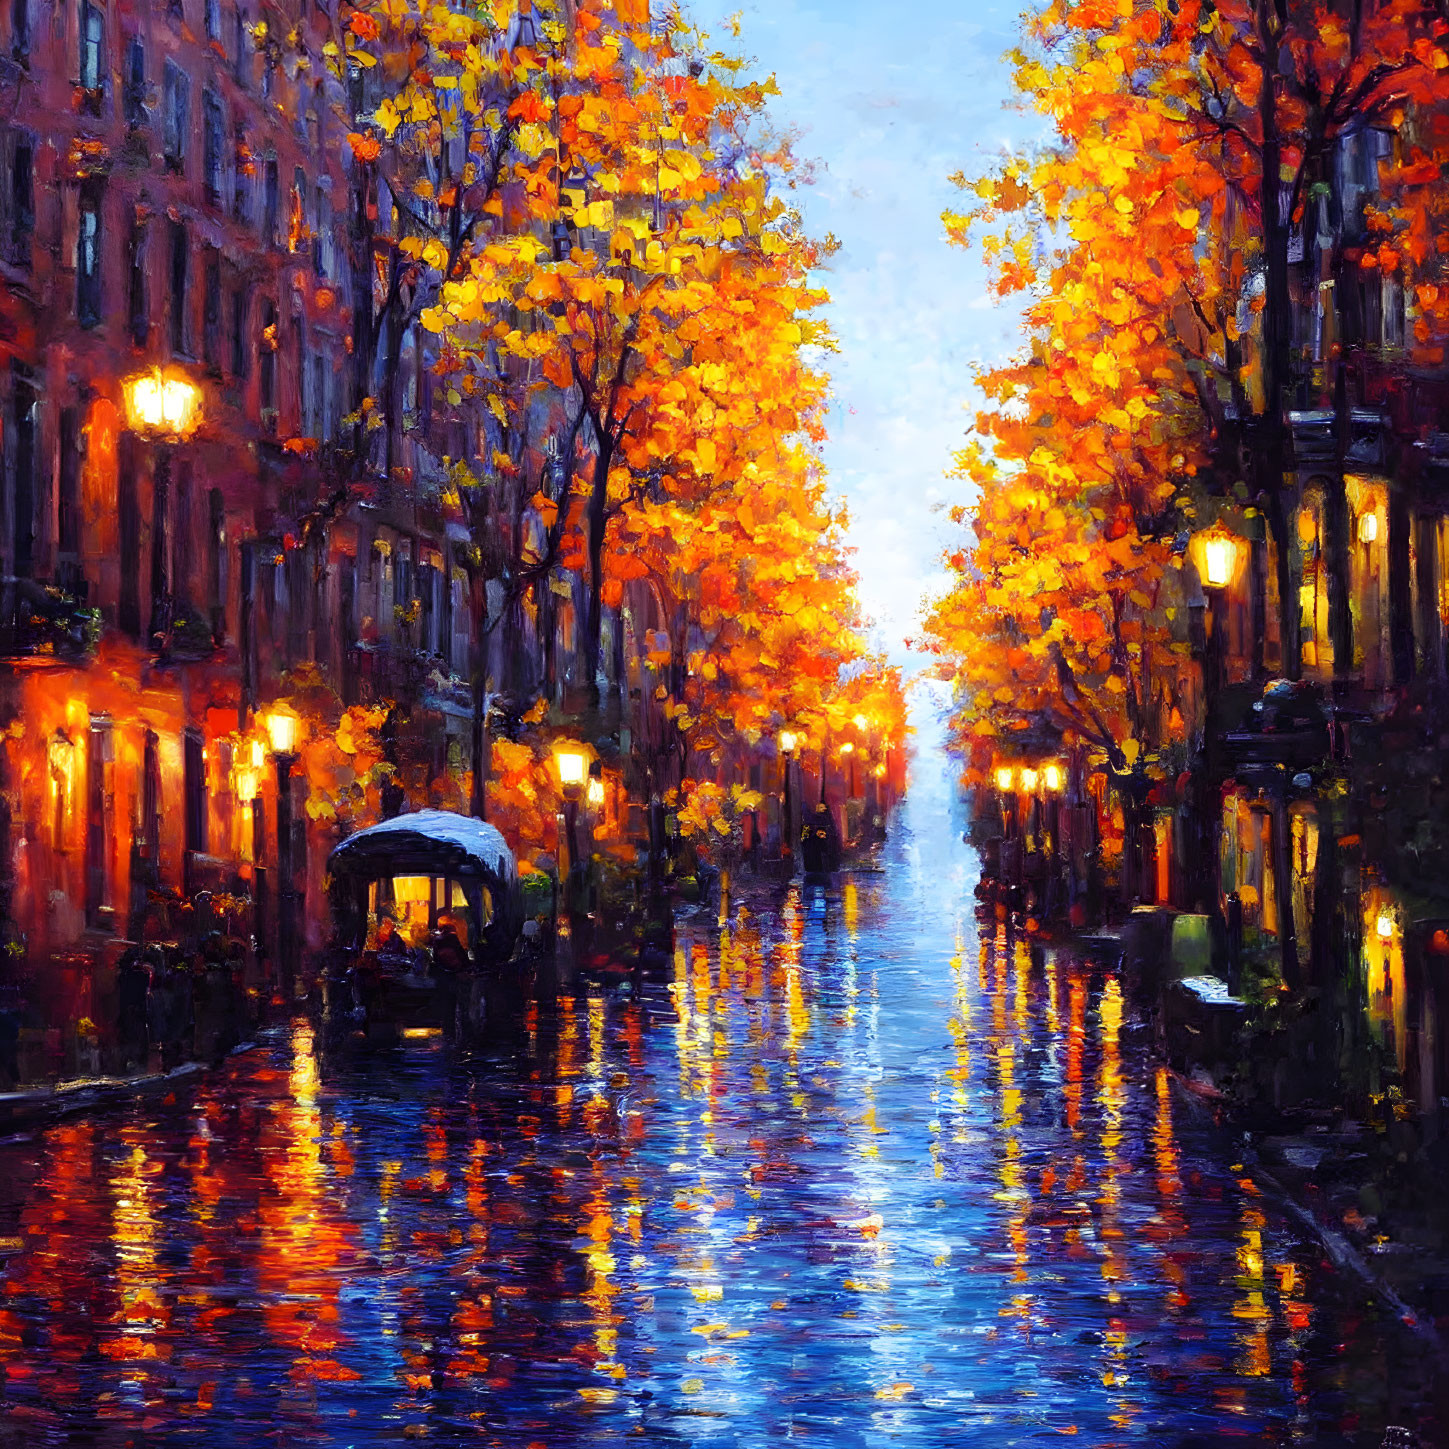 Autumn-themed painting of rain-soaked street with illuminated buildings.